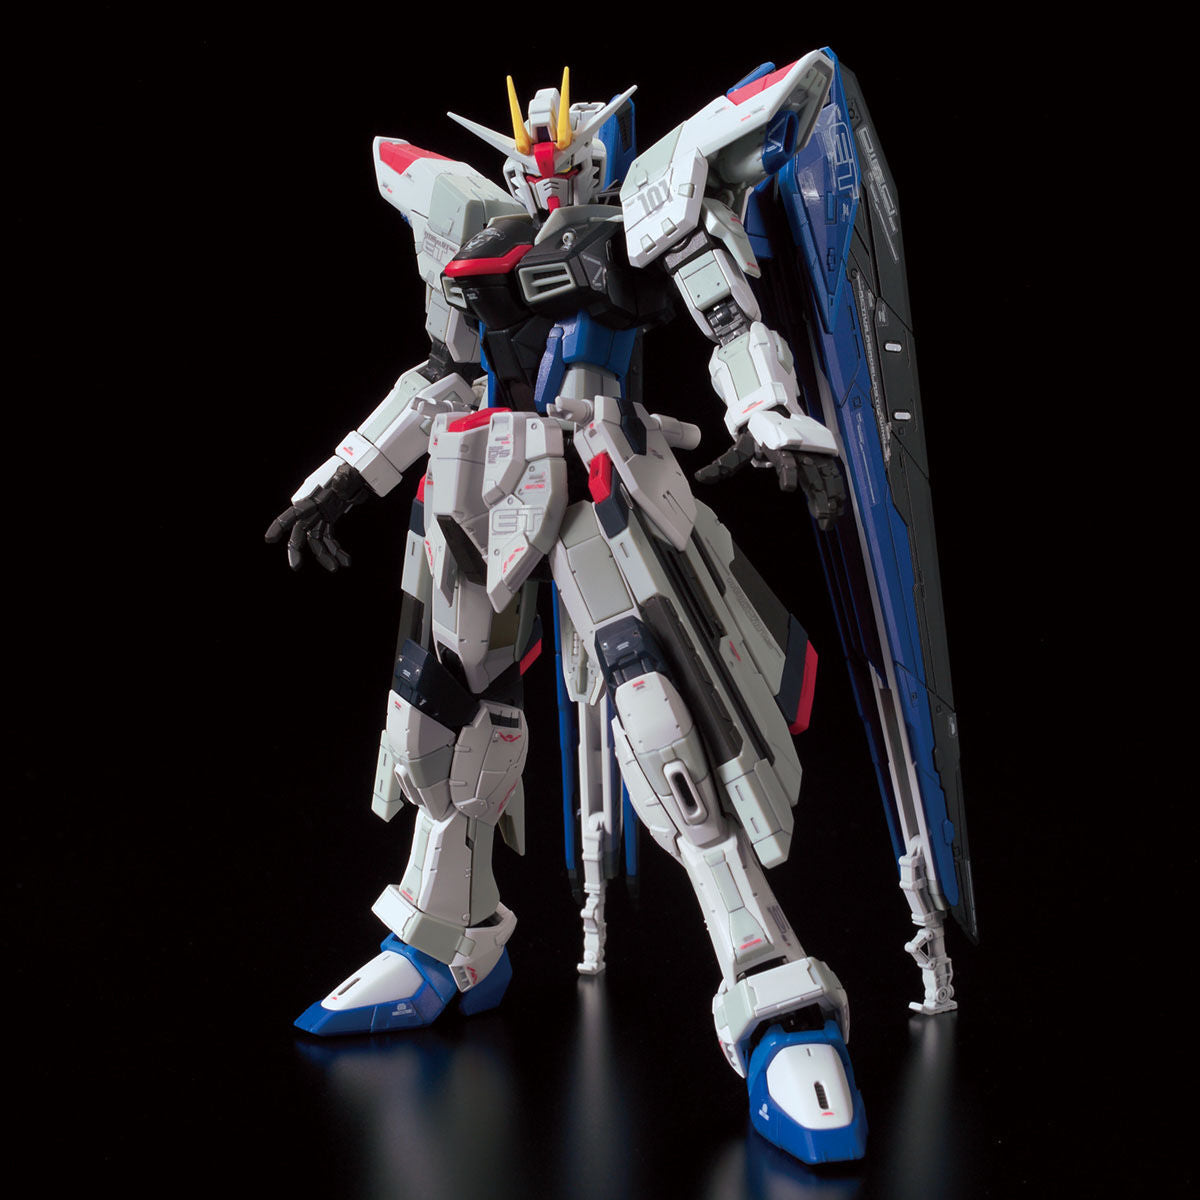 [IN STOCK in HK] RG 1/144 Gundam Base Limited ZGMF-X10A Freedom Gundam Ver.GCP